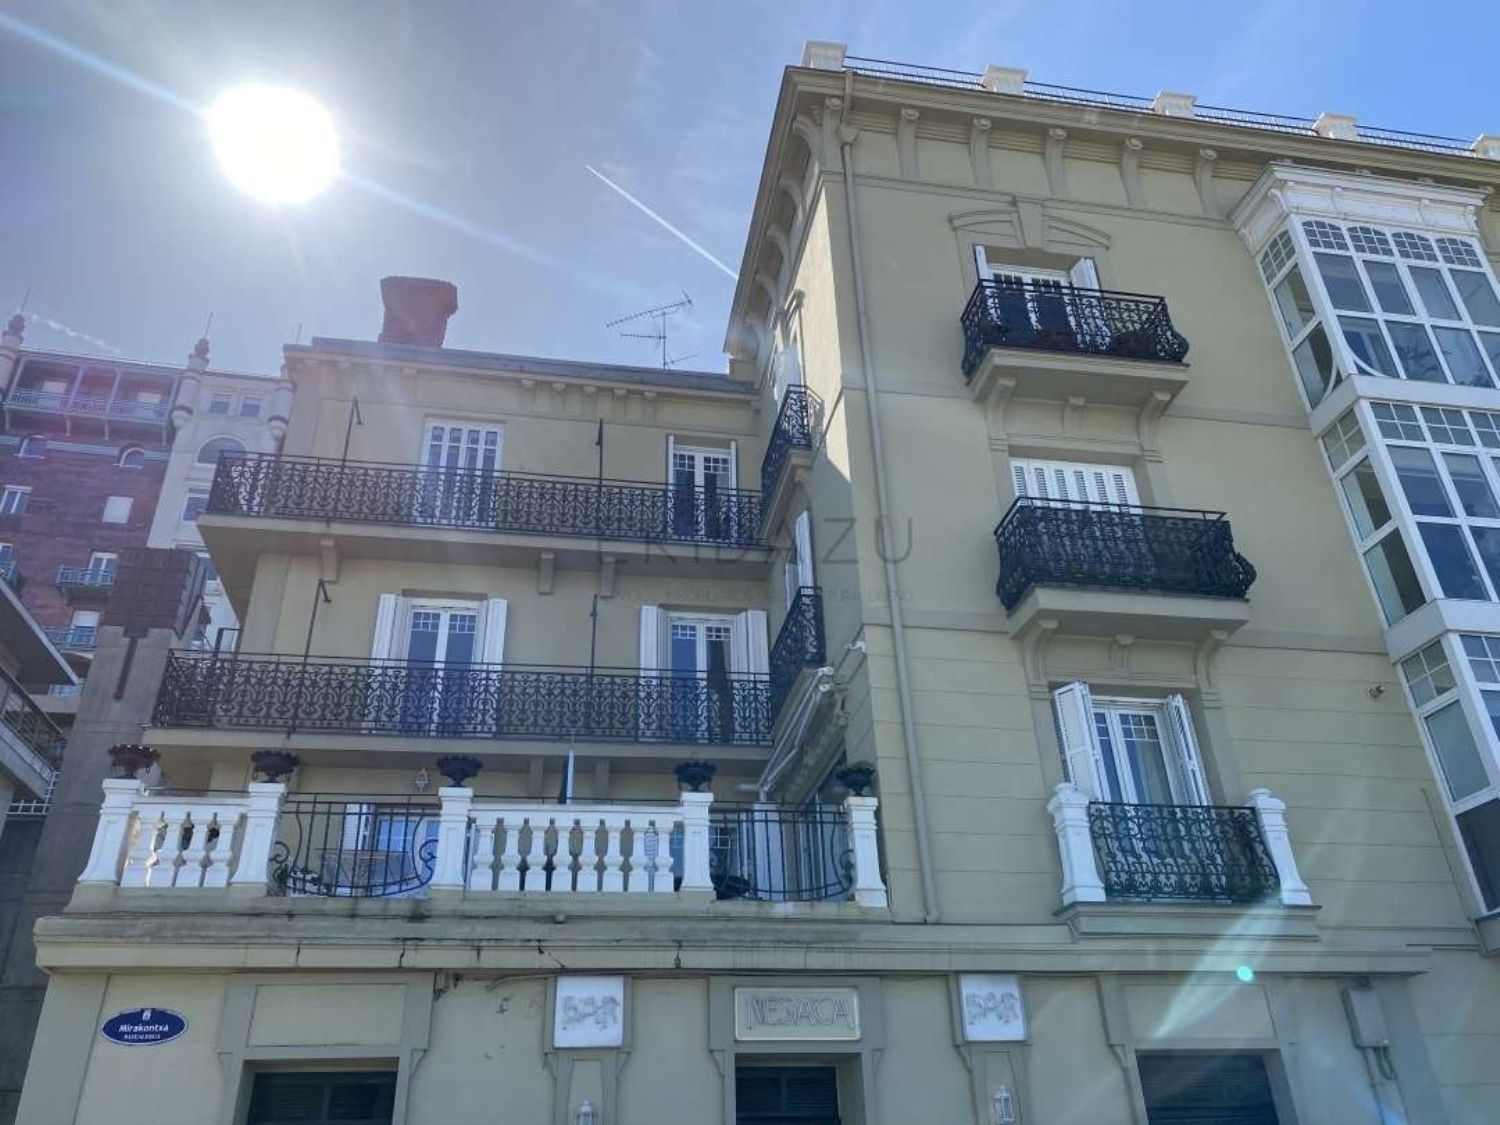 Apartamento en venta en primera línea de mar en Paseo Miraconcha, en Donostia-San Sebastian